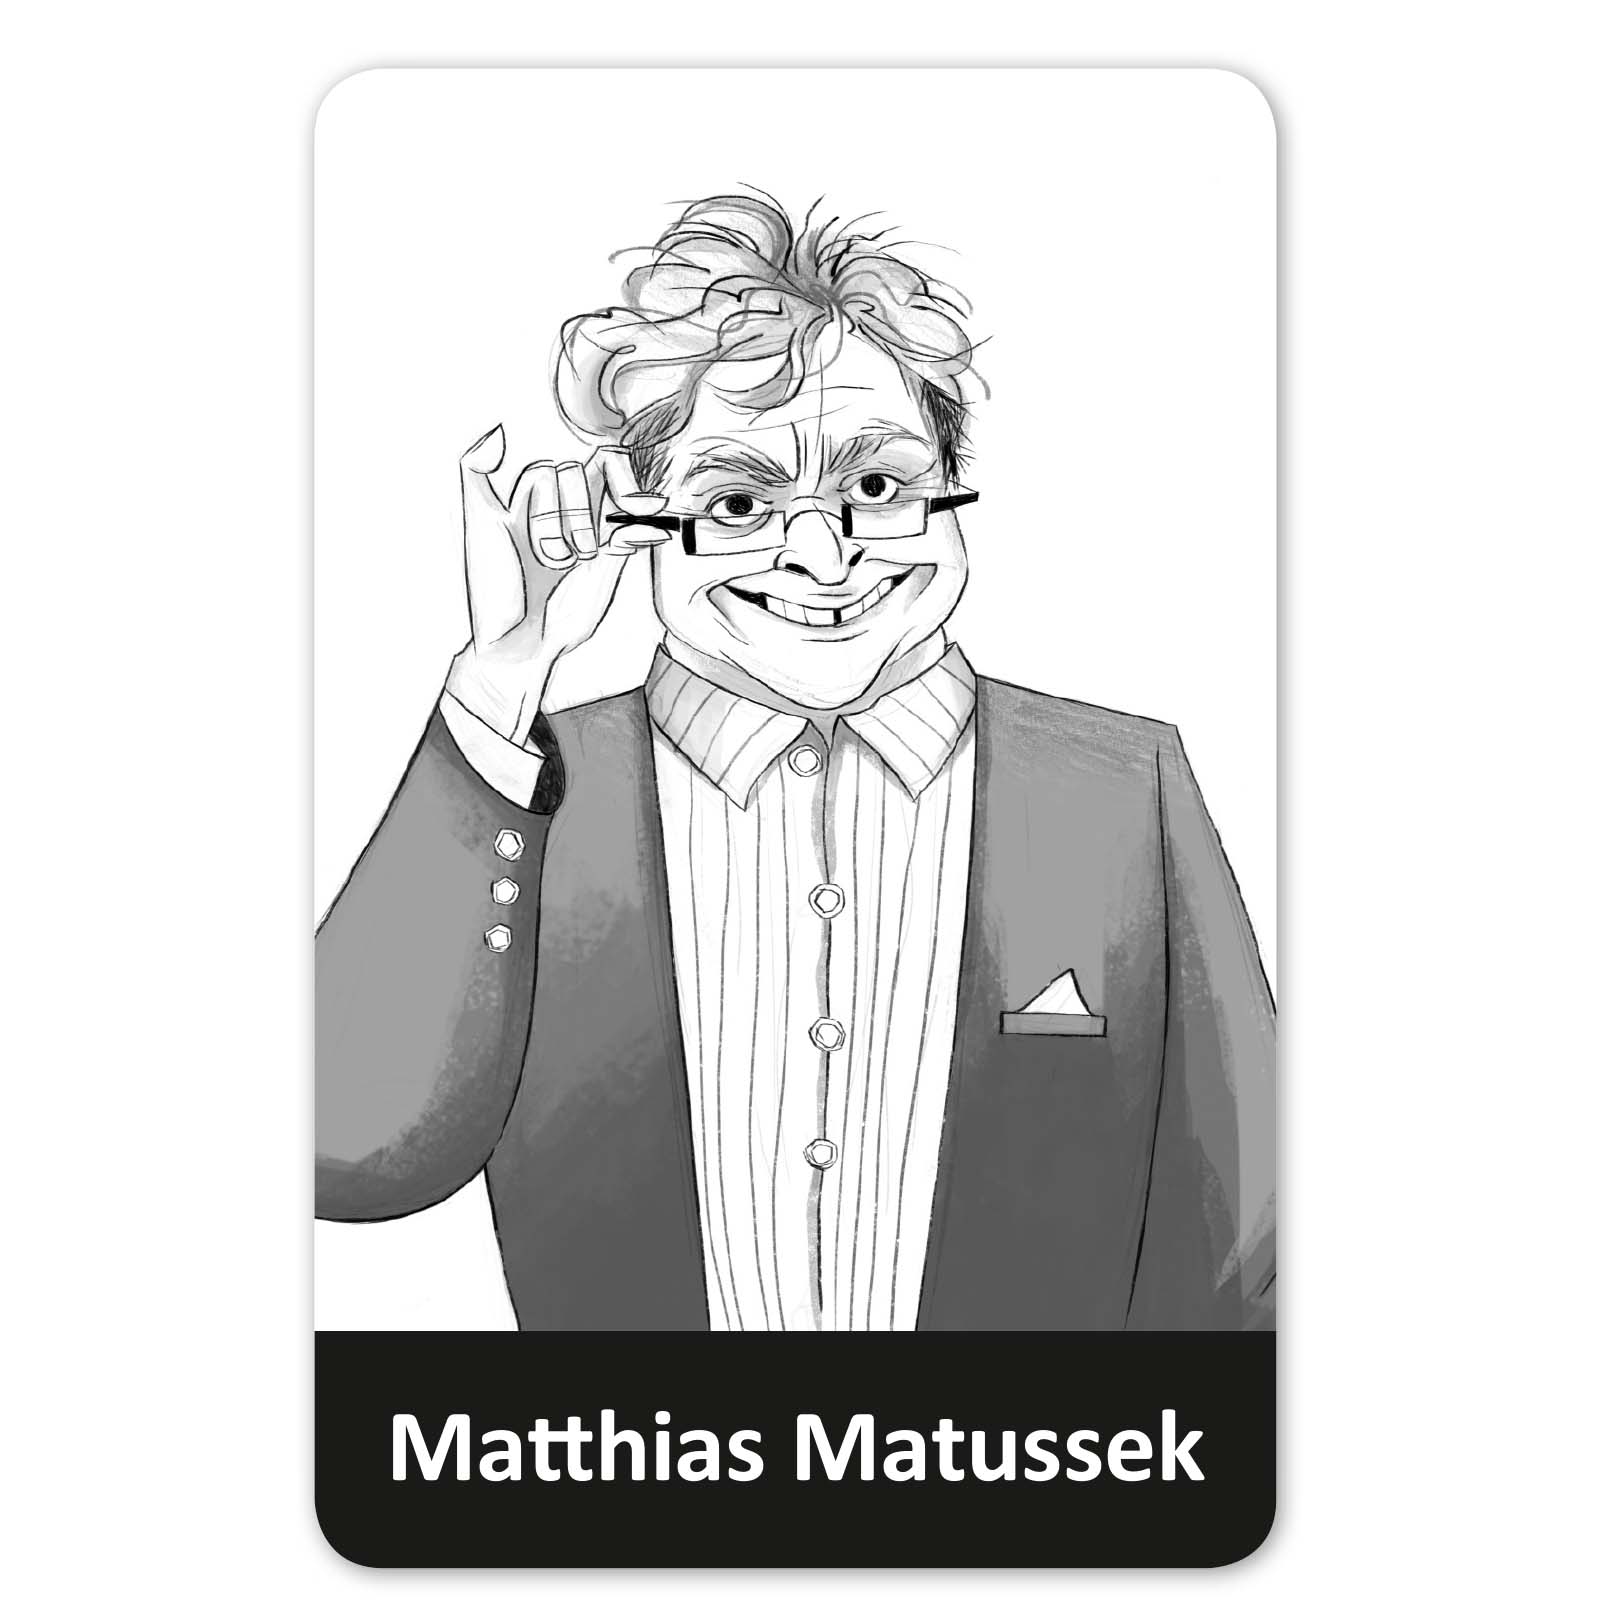 Matthias Matussek